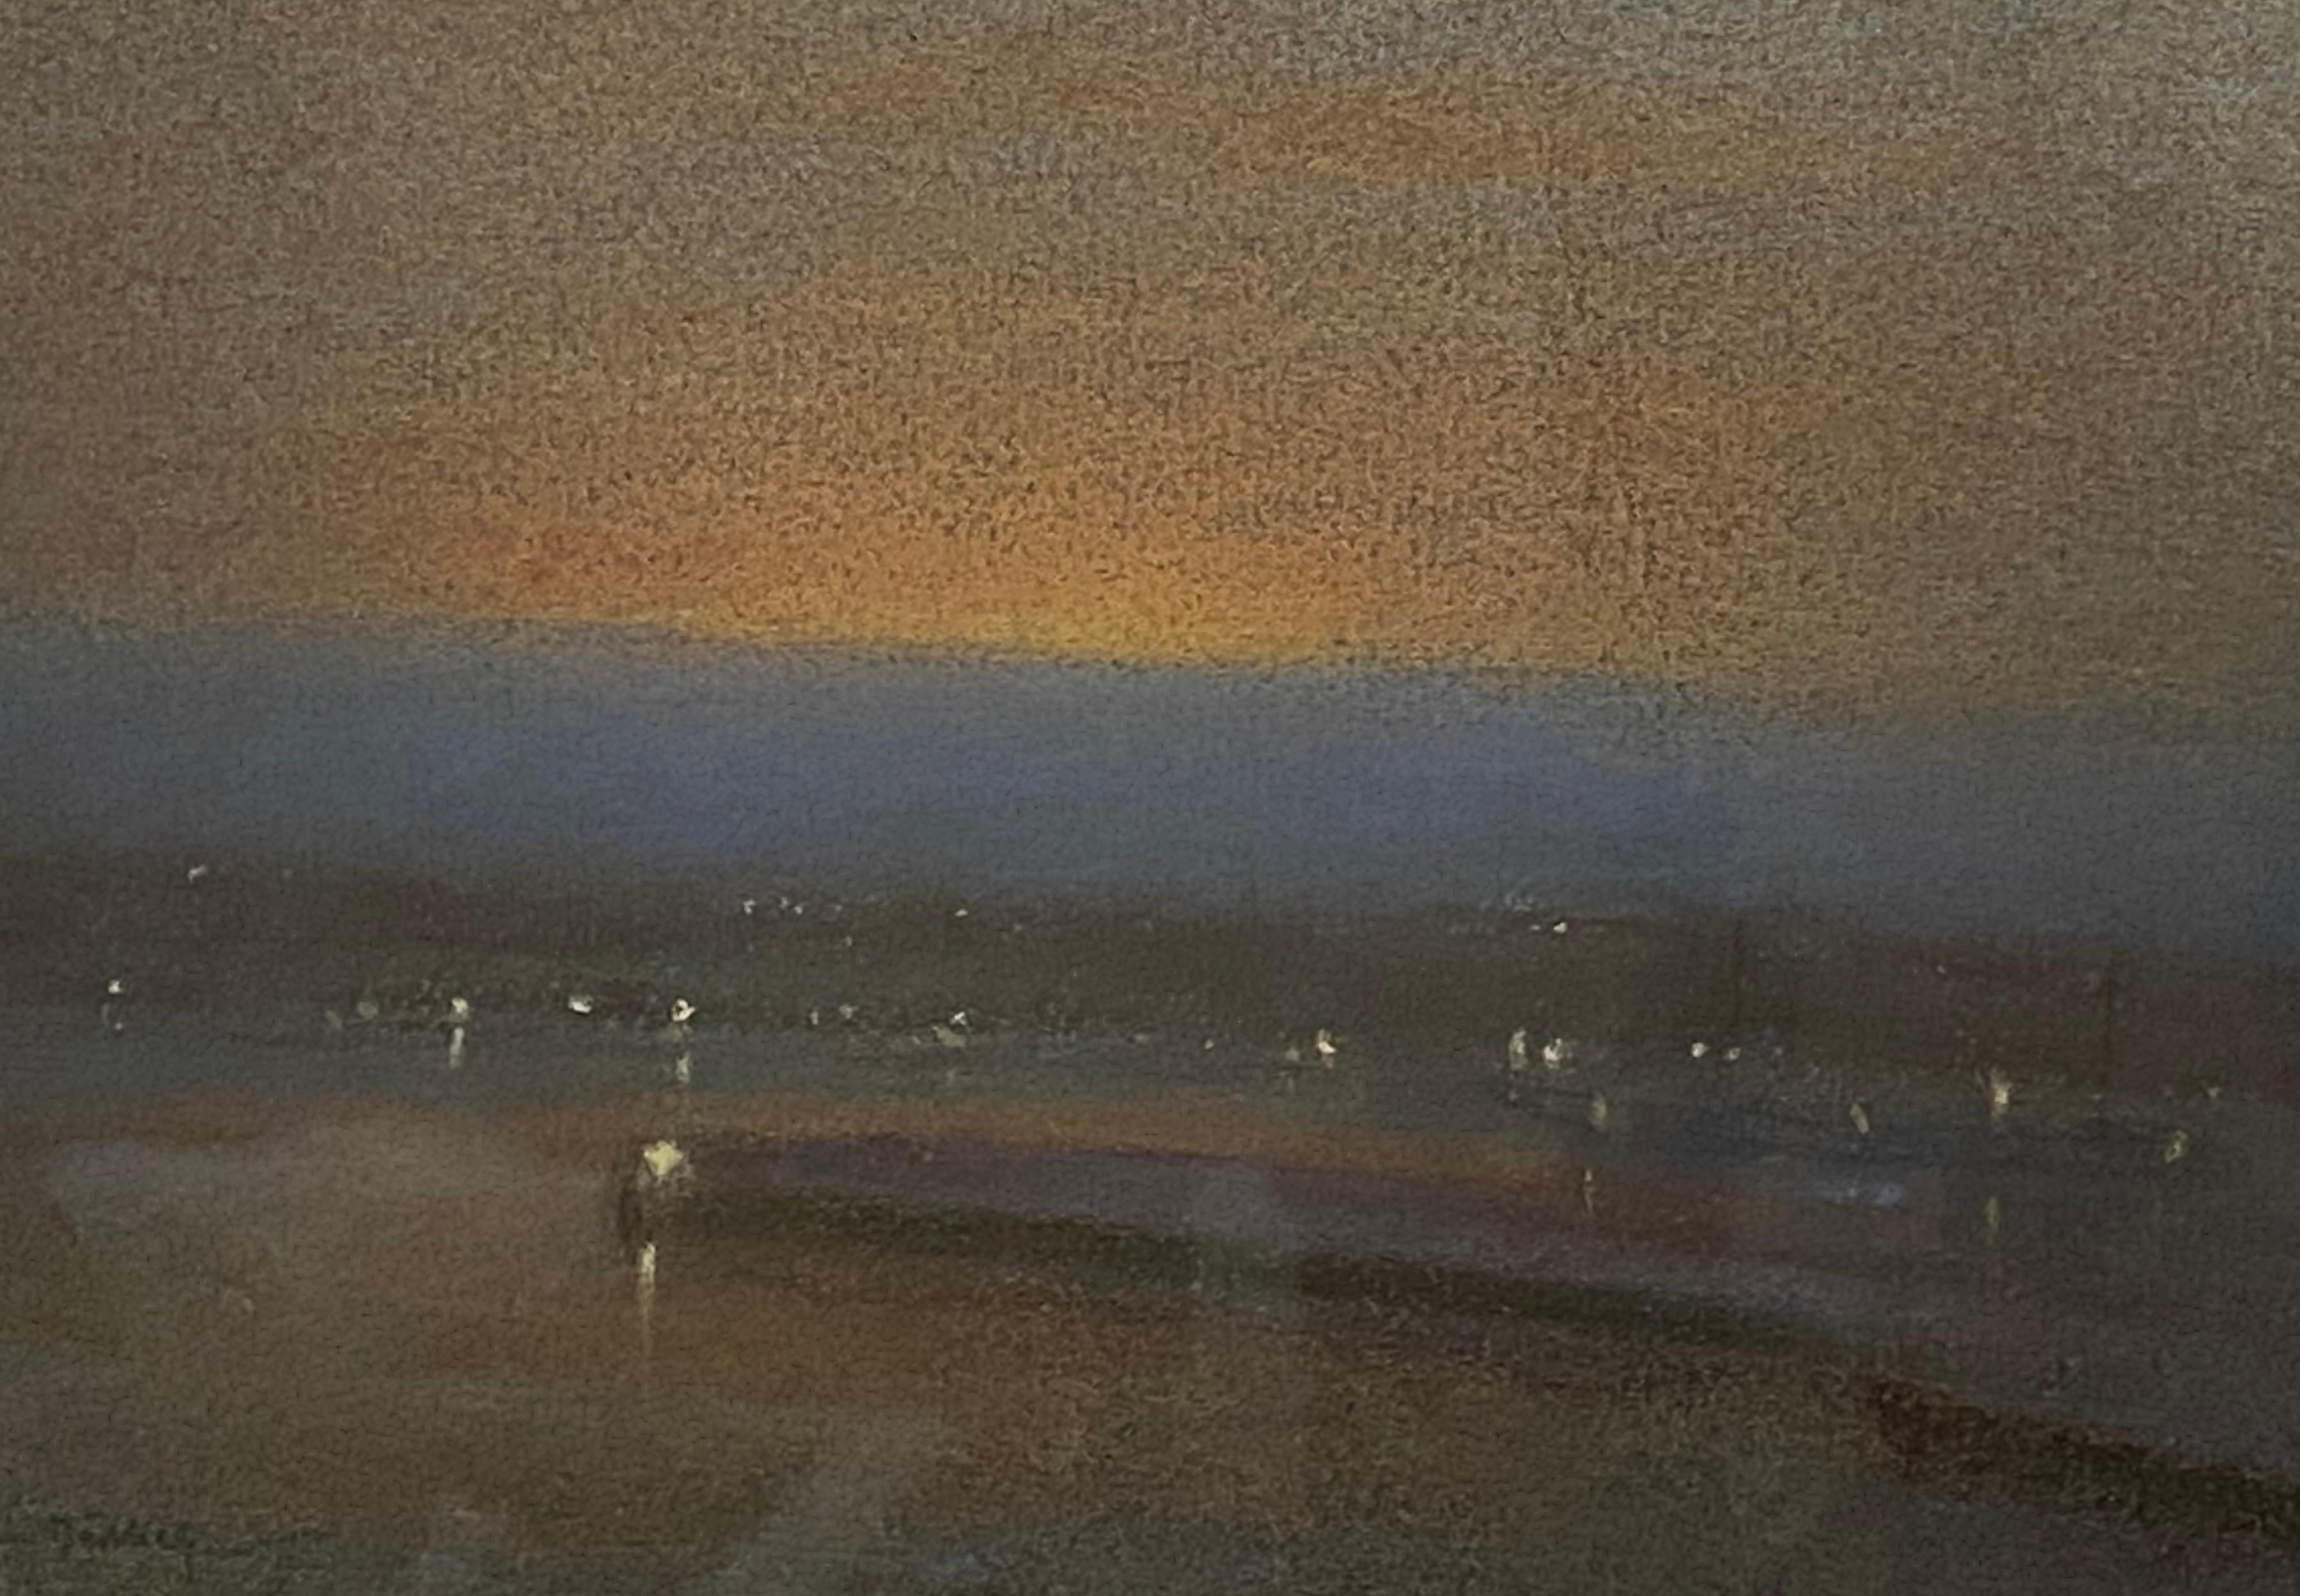 Sunset River - Beige Landscape Painting par Johann Berthelsen